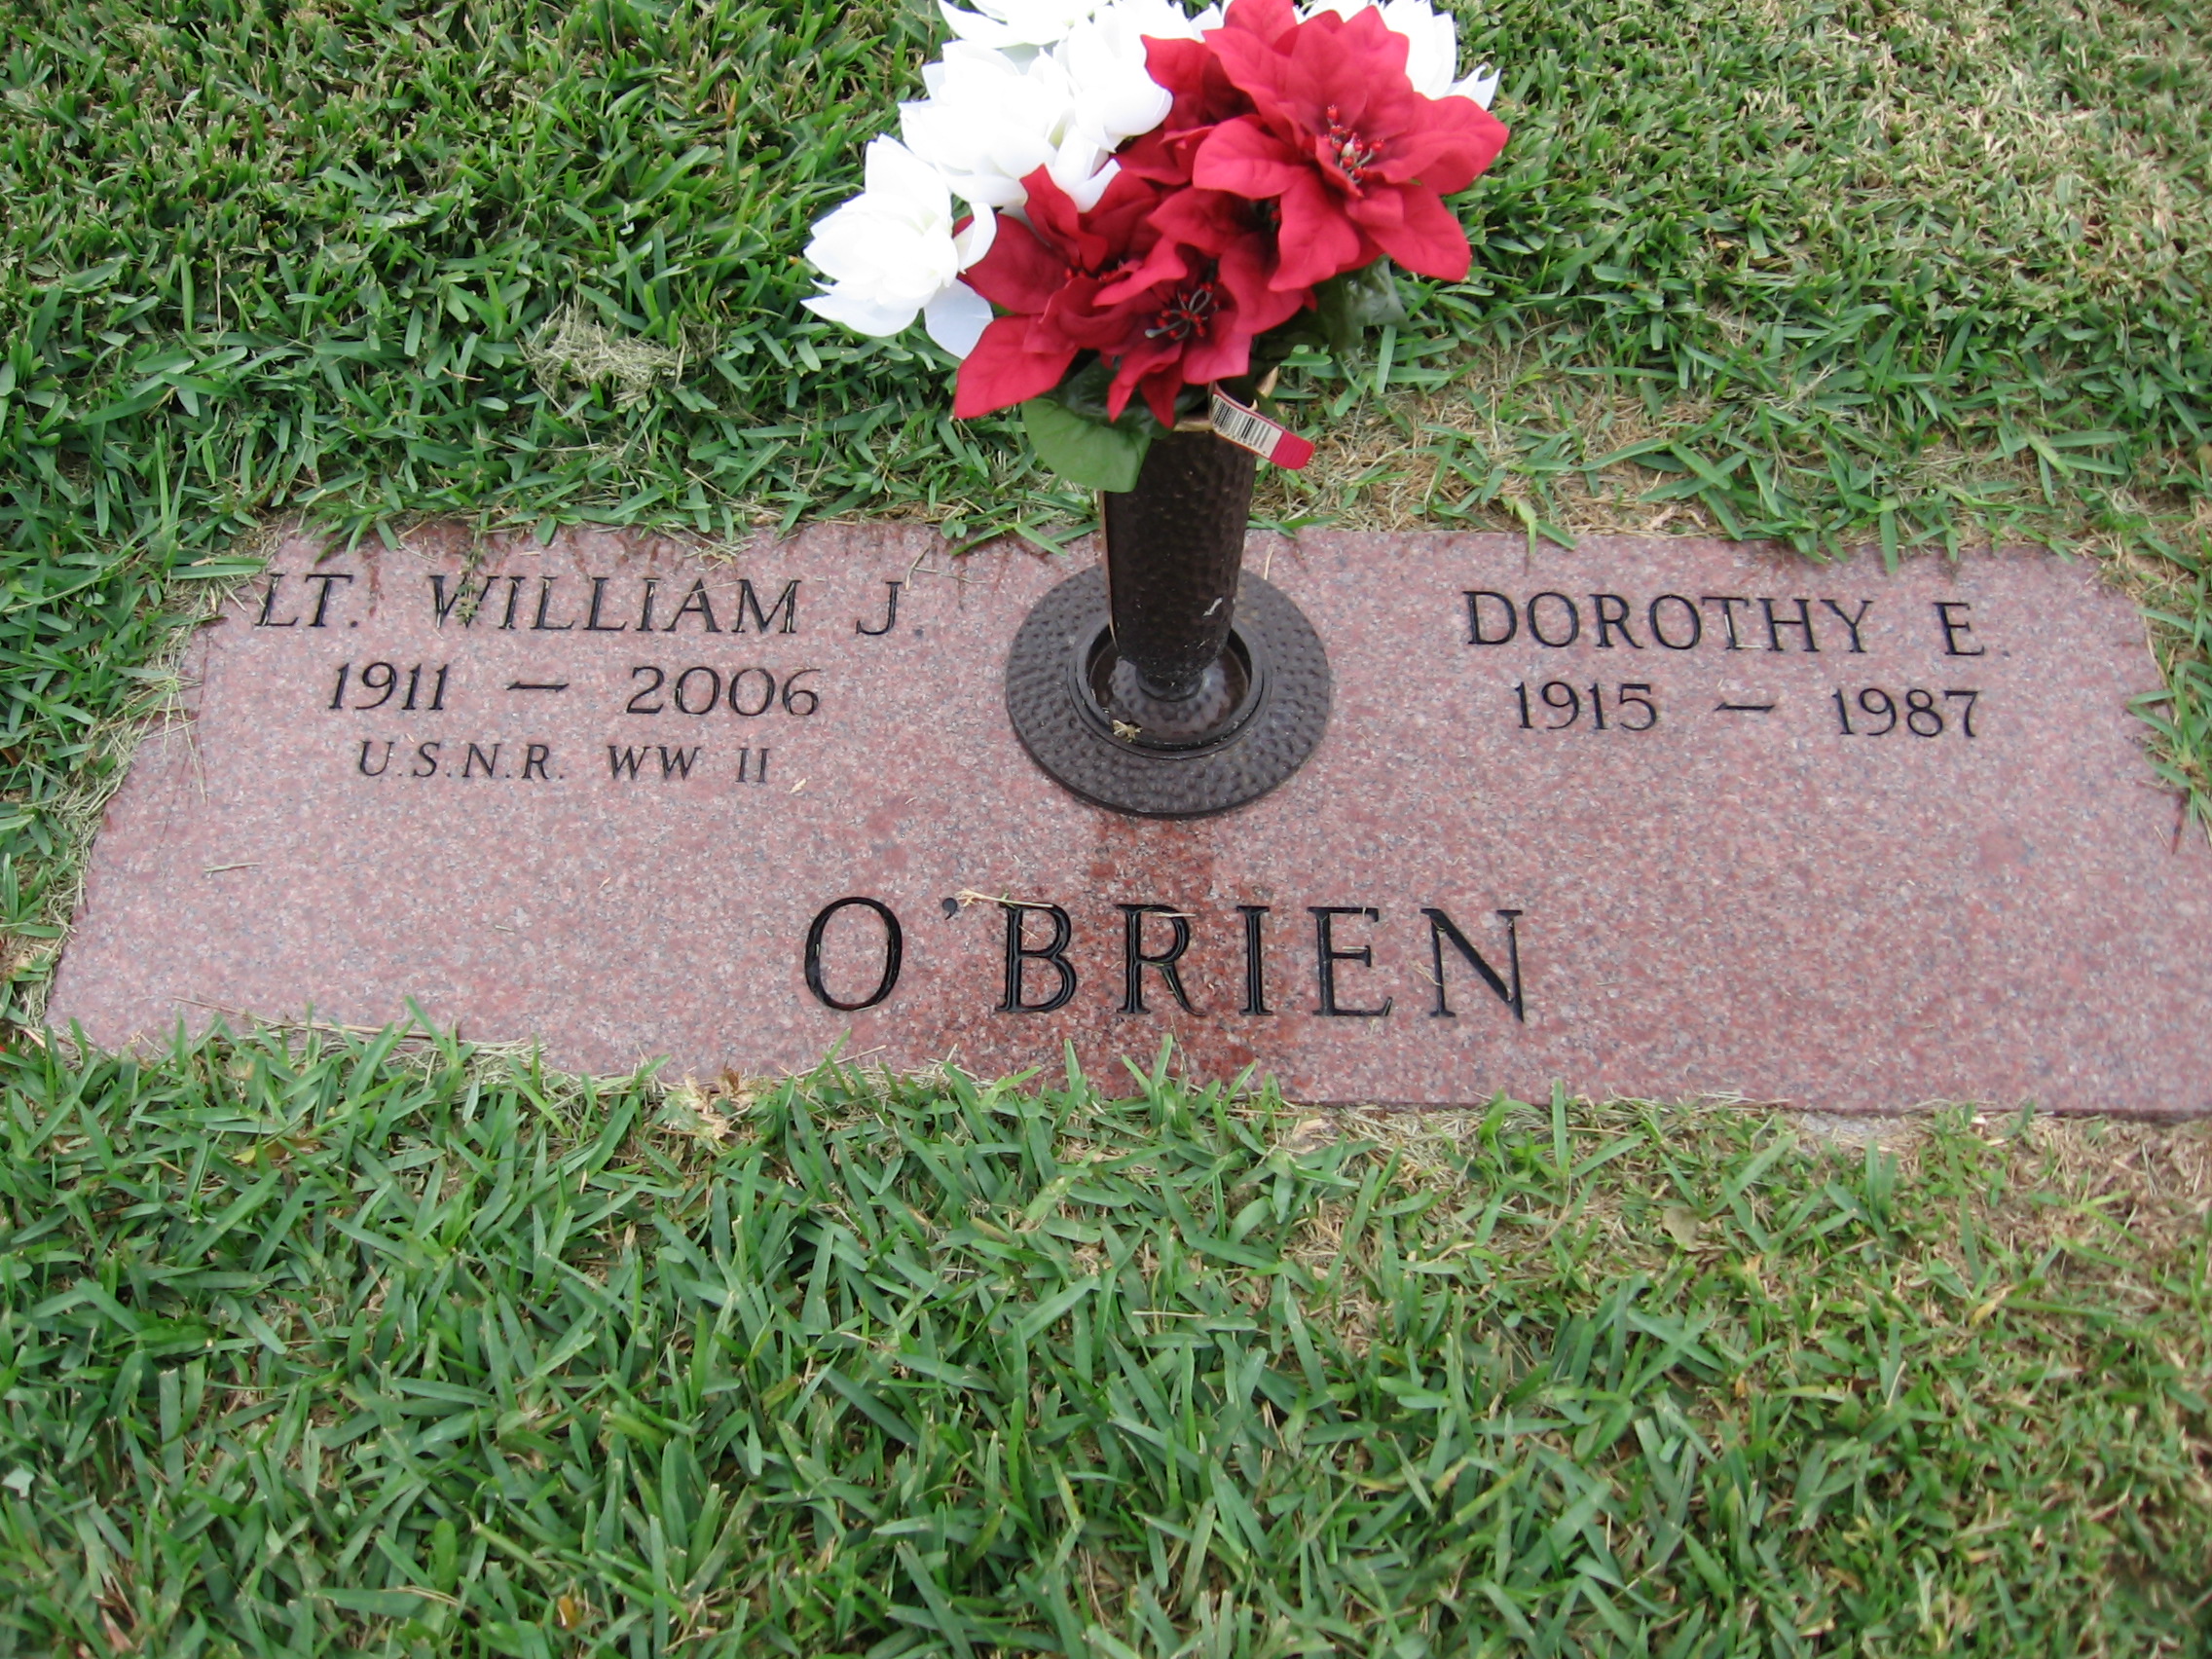 Lieut William J O'Brien